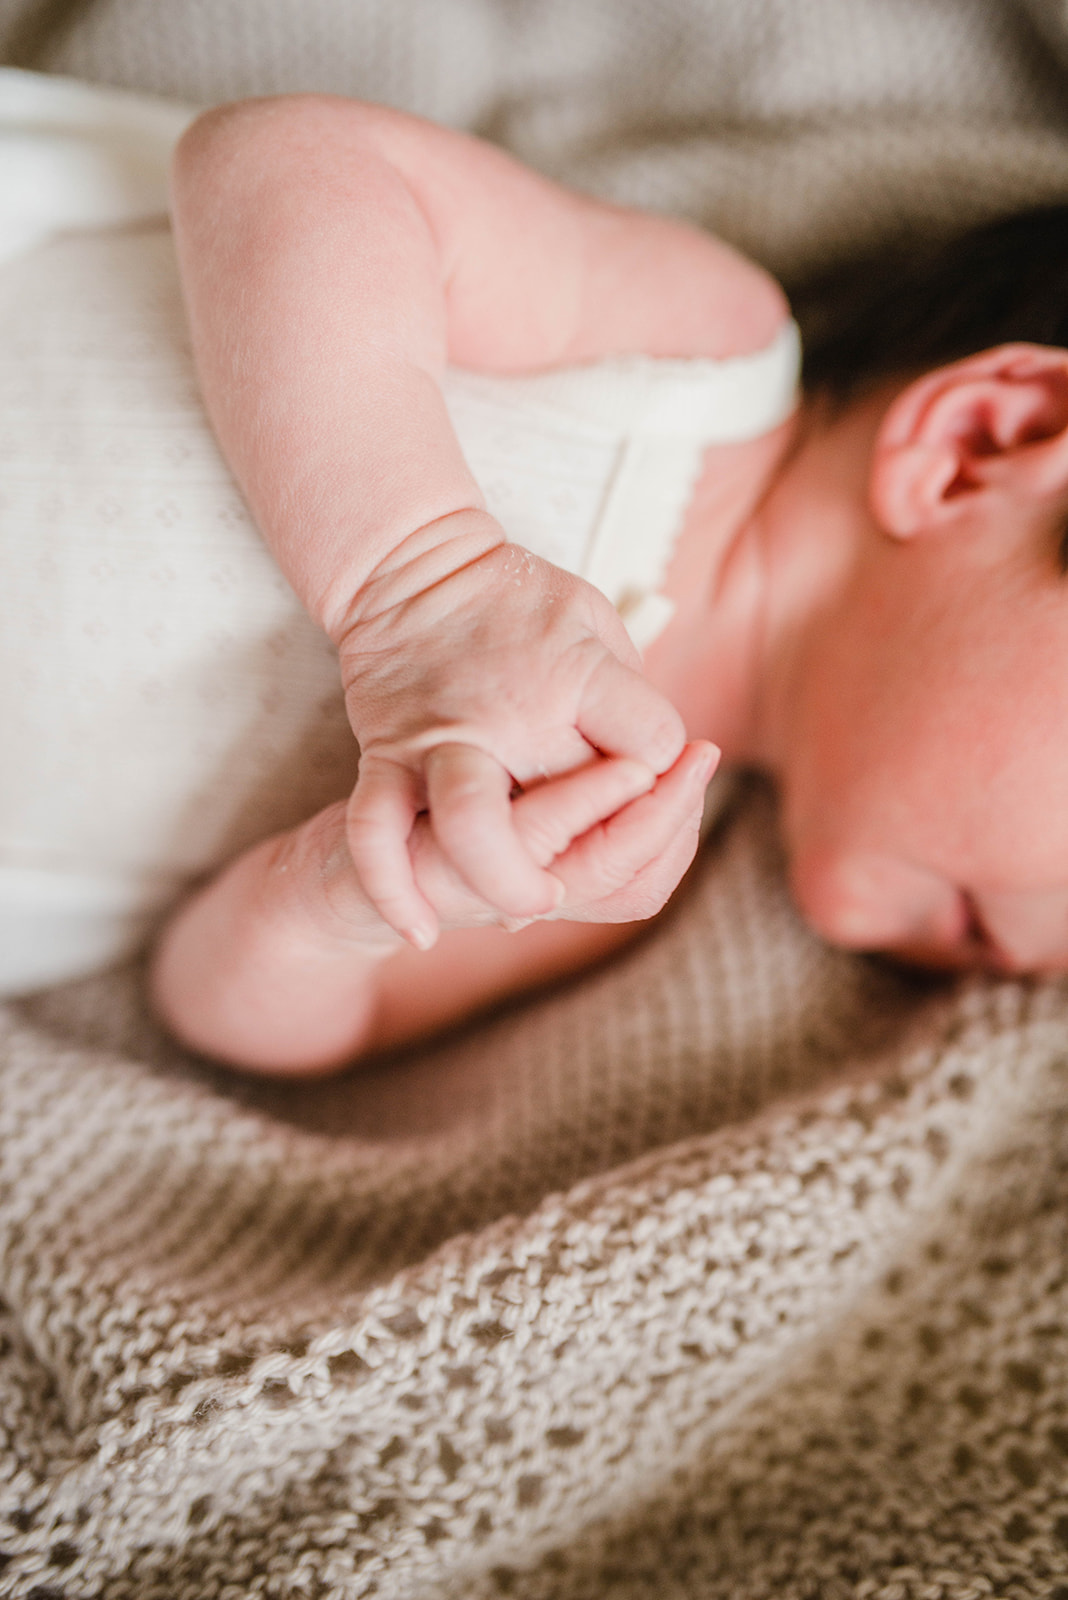 Photograph of newborn baby hands